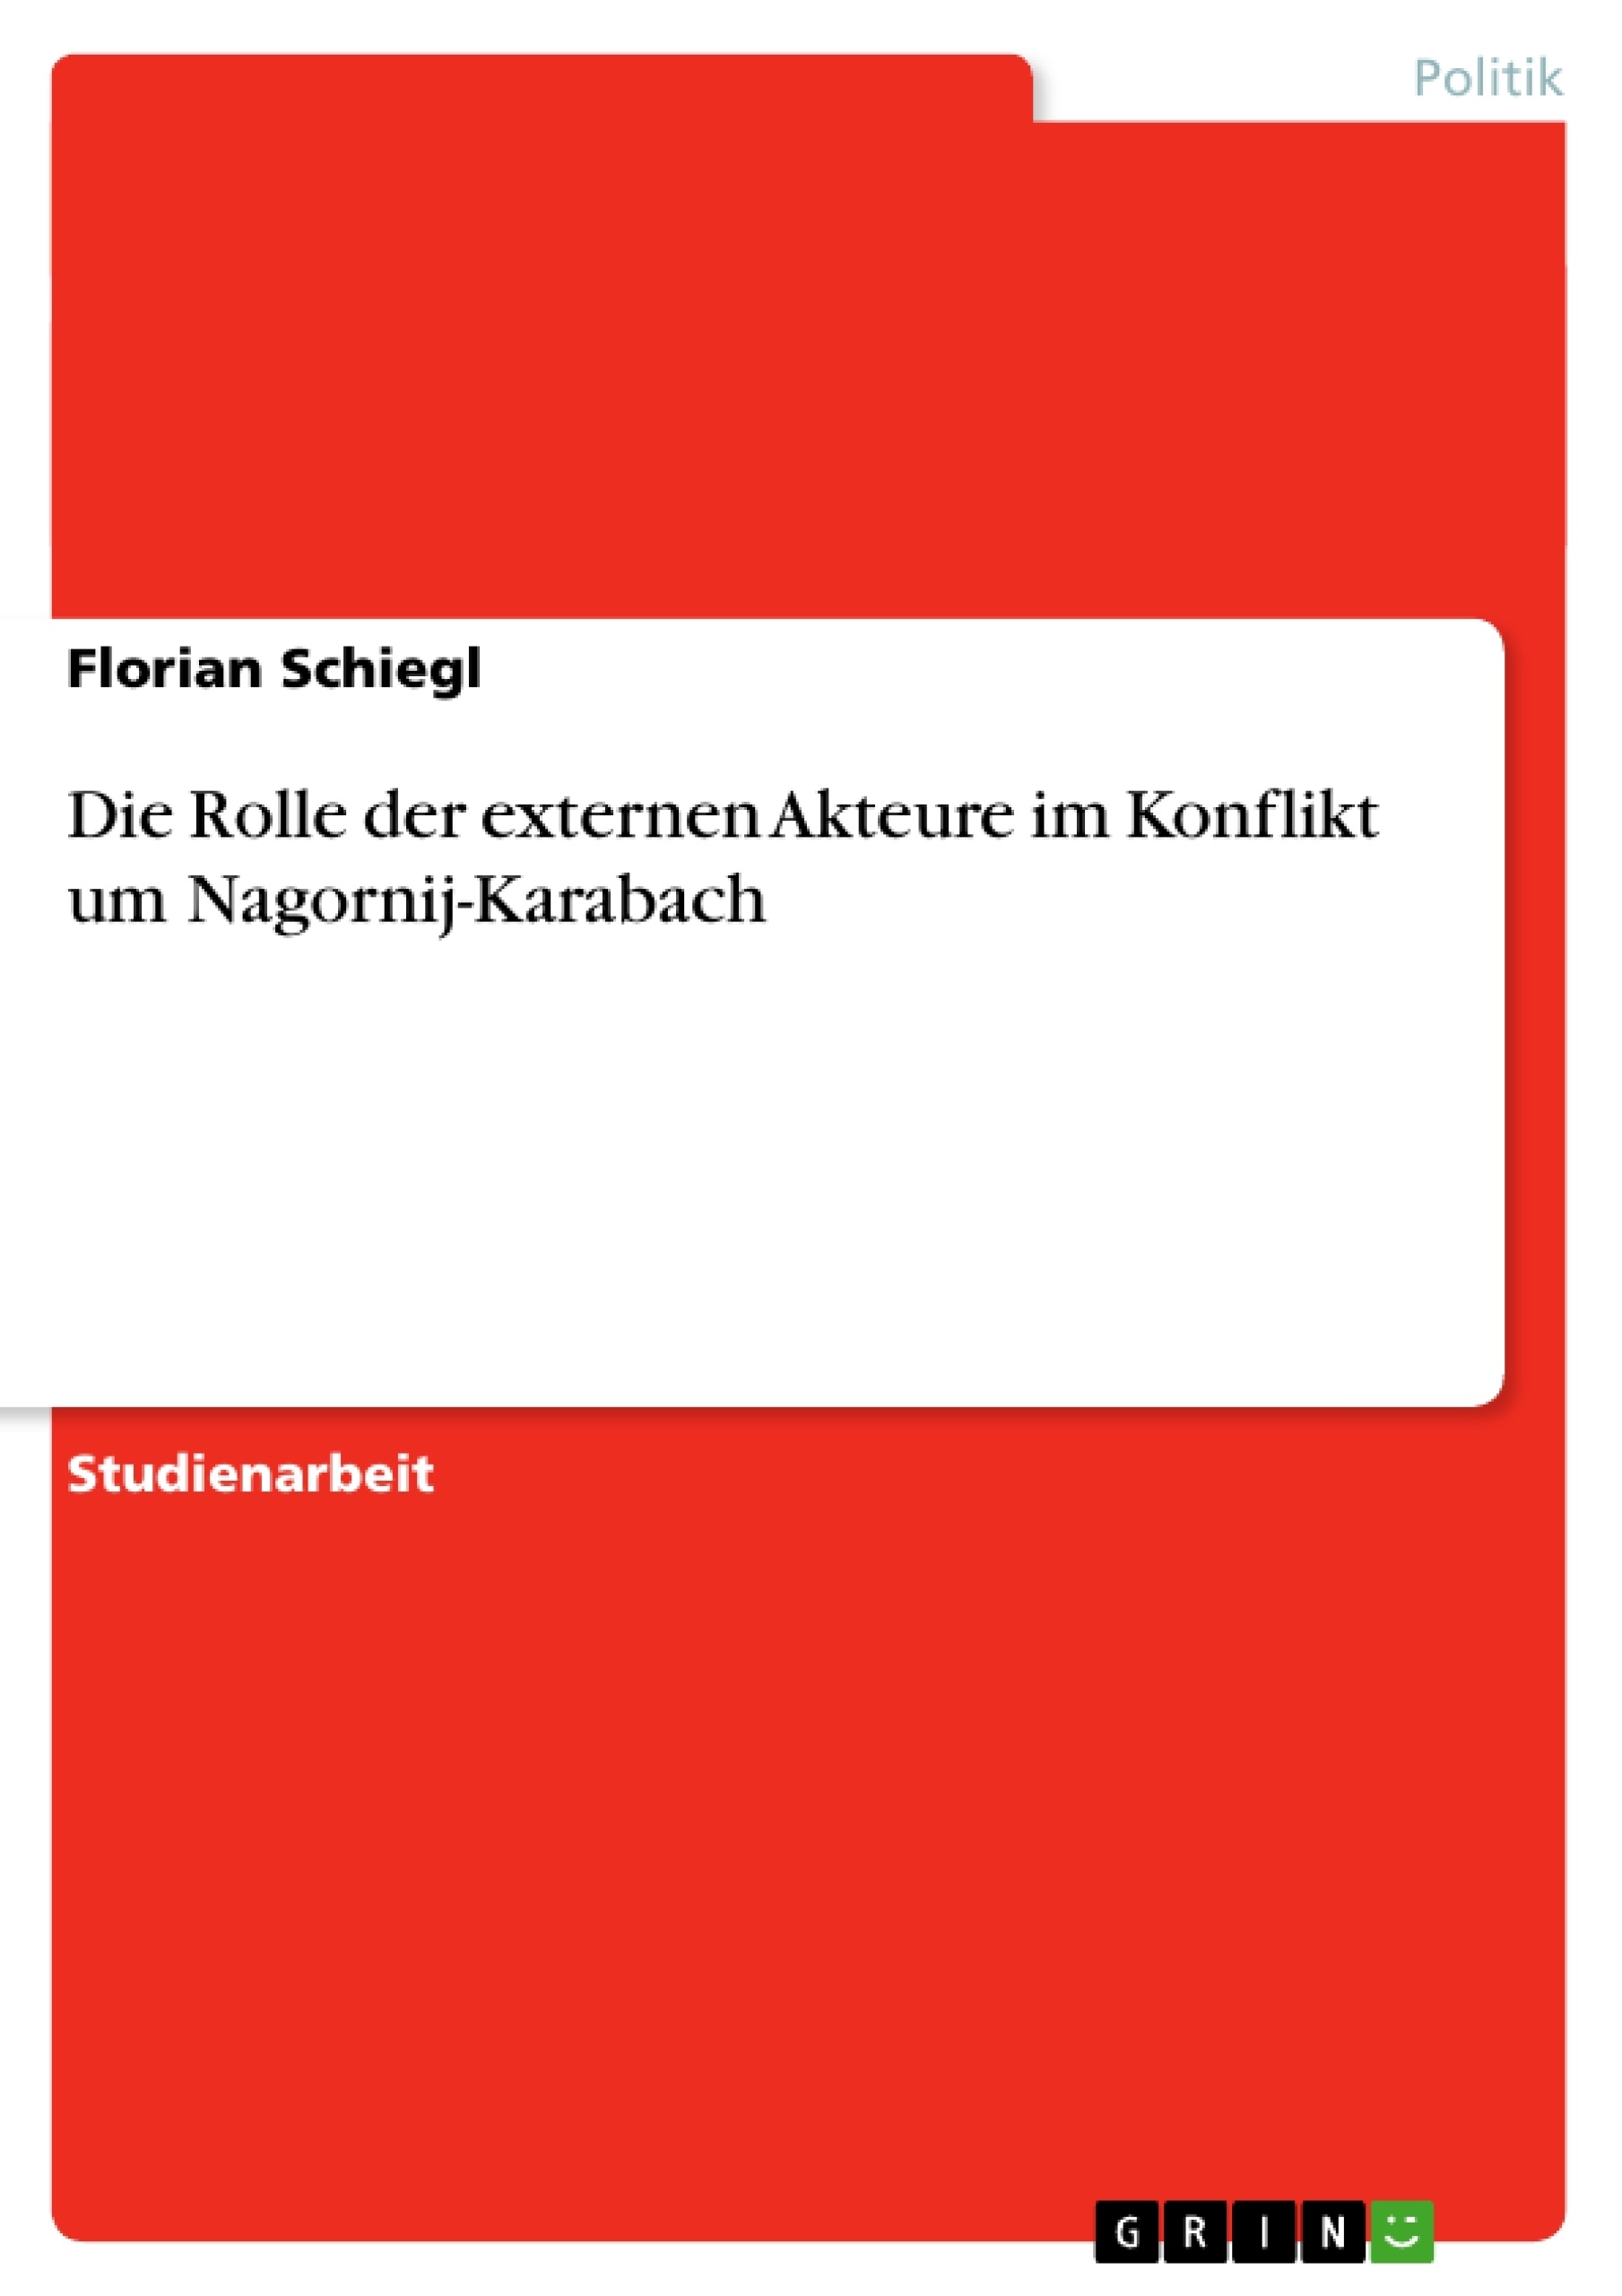 Title: Die Rolle der externen Akteure im Konflikt um Nagornij-Karabach